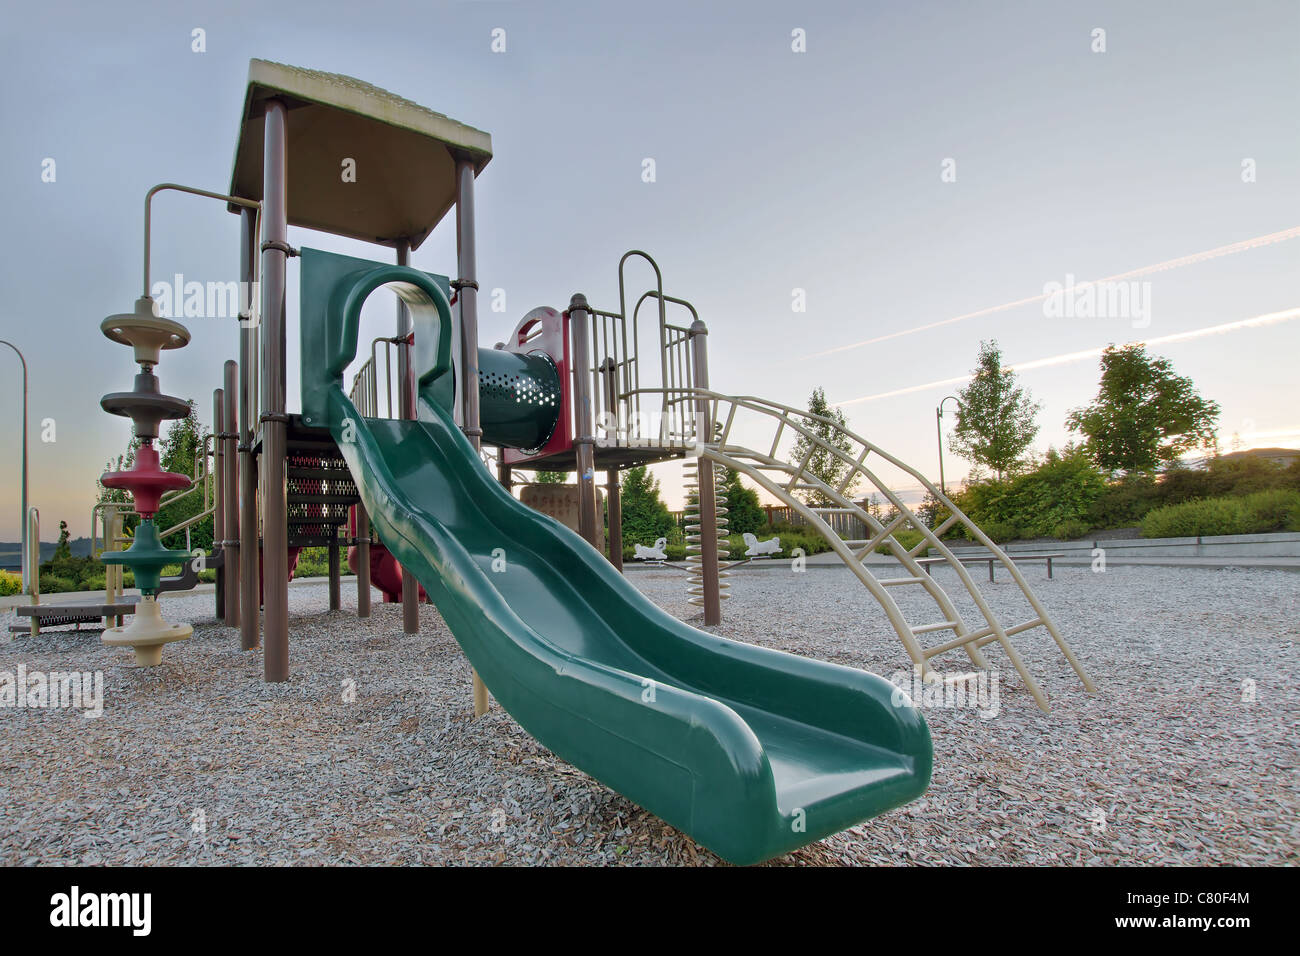 Neighborhood Public Park Children's Playground Gym Structure in Suburban Area Stock Photo